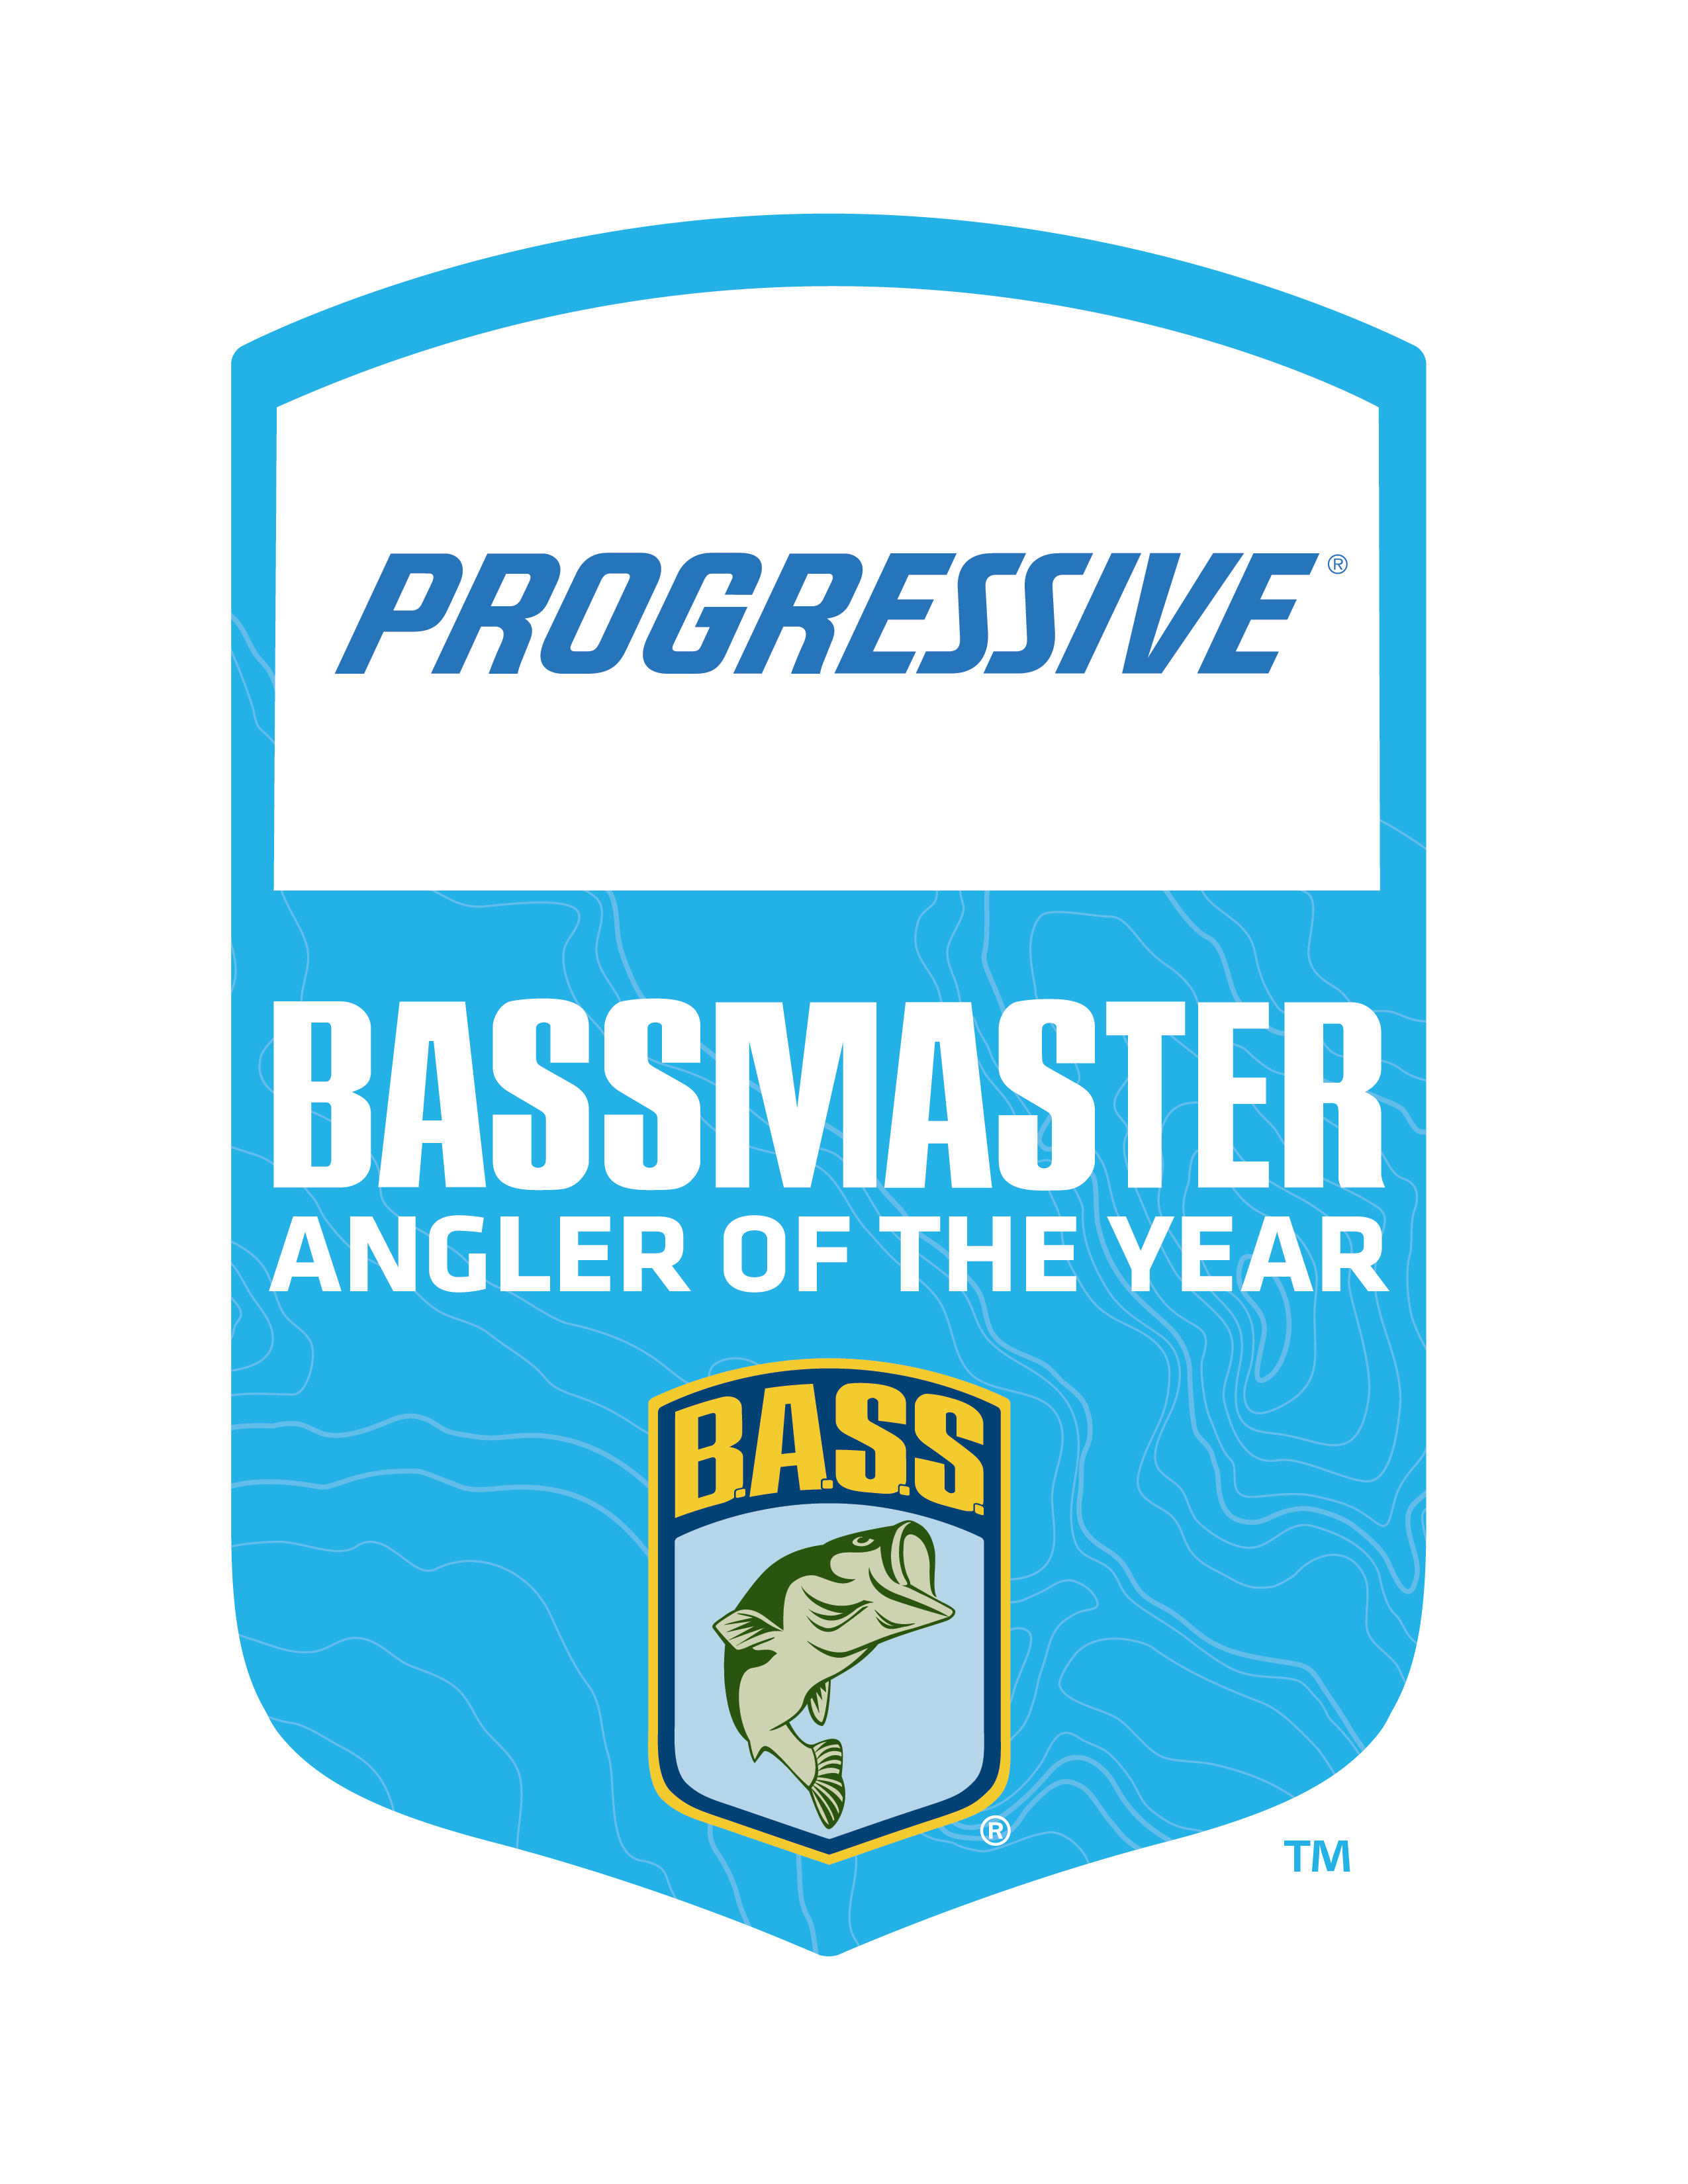 AOY_Progressive_Bassmaster_4C.png